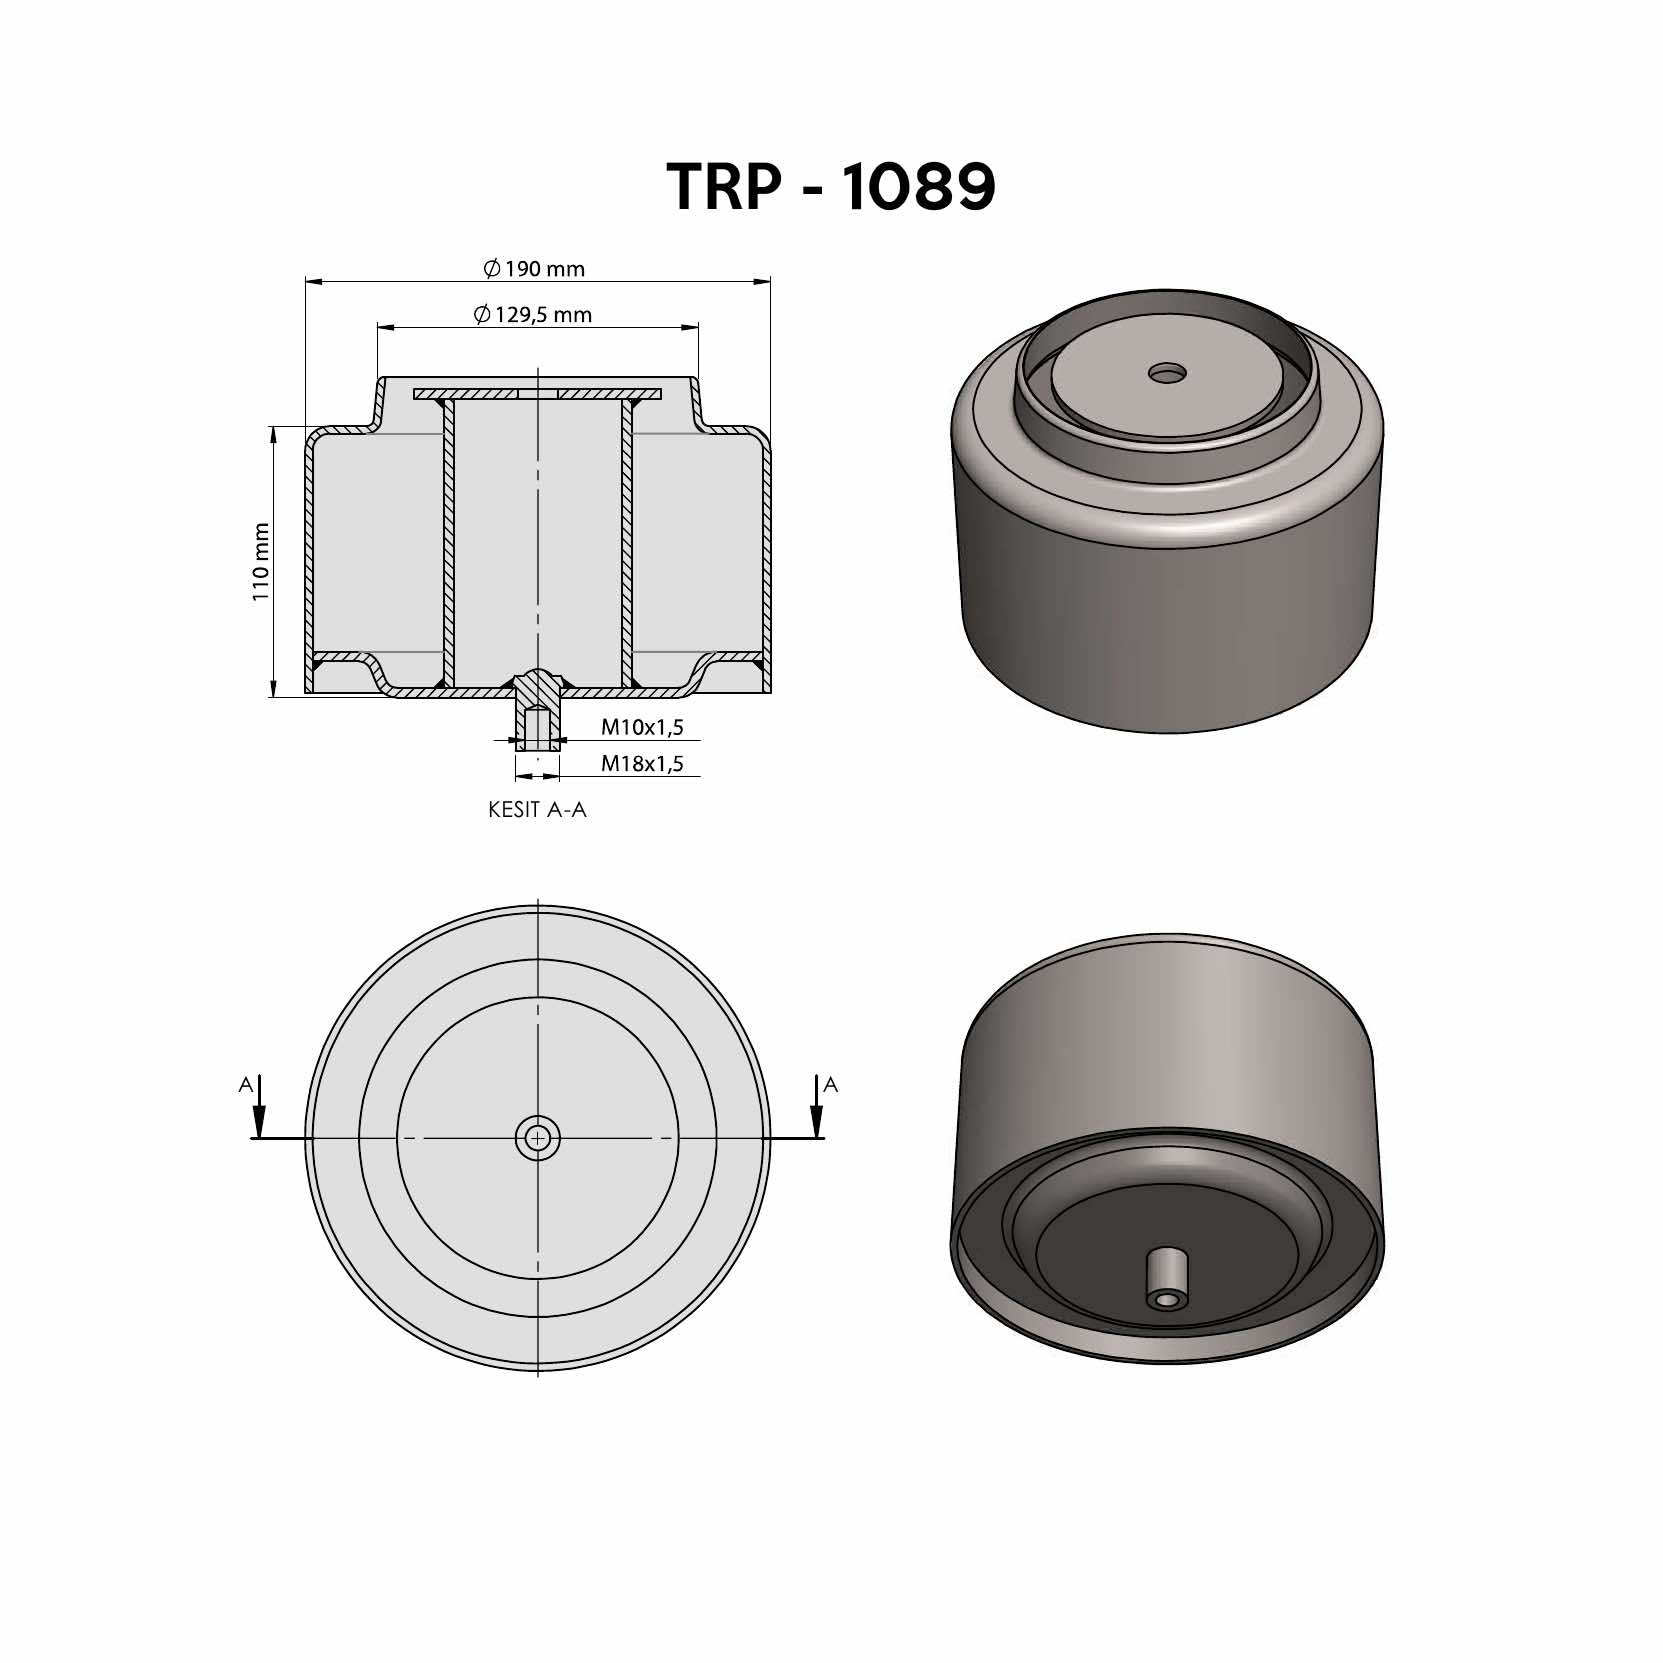 TRP-1089